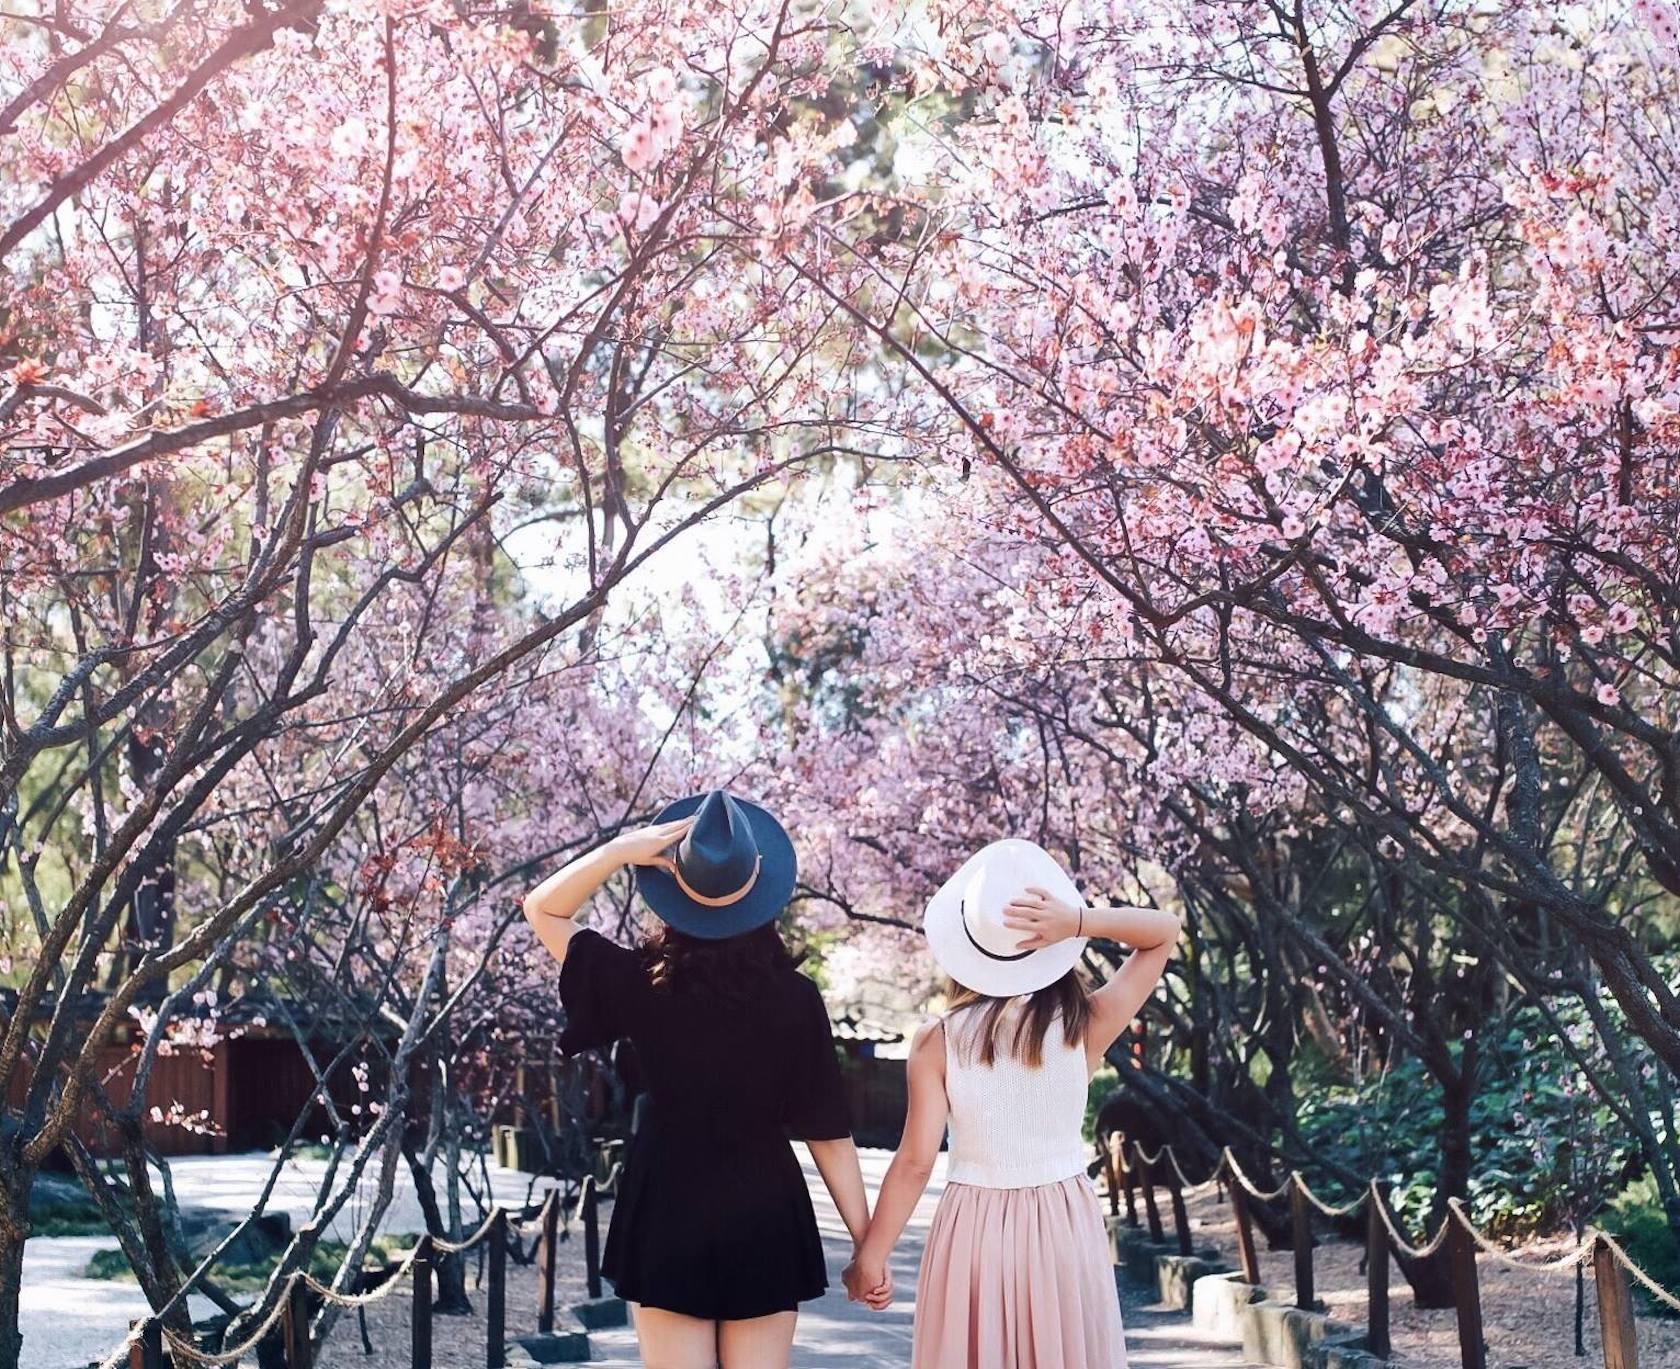 Sydney Cherry Blossom Festival See Japan S Famous Sakura This Month,Barefoot Contessa Jeffrey Meme